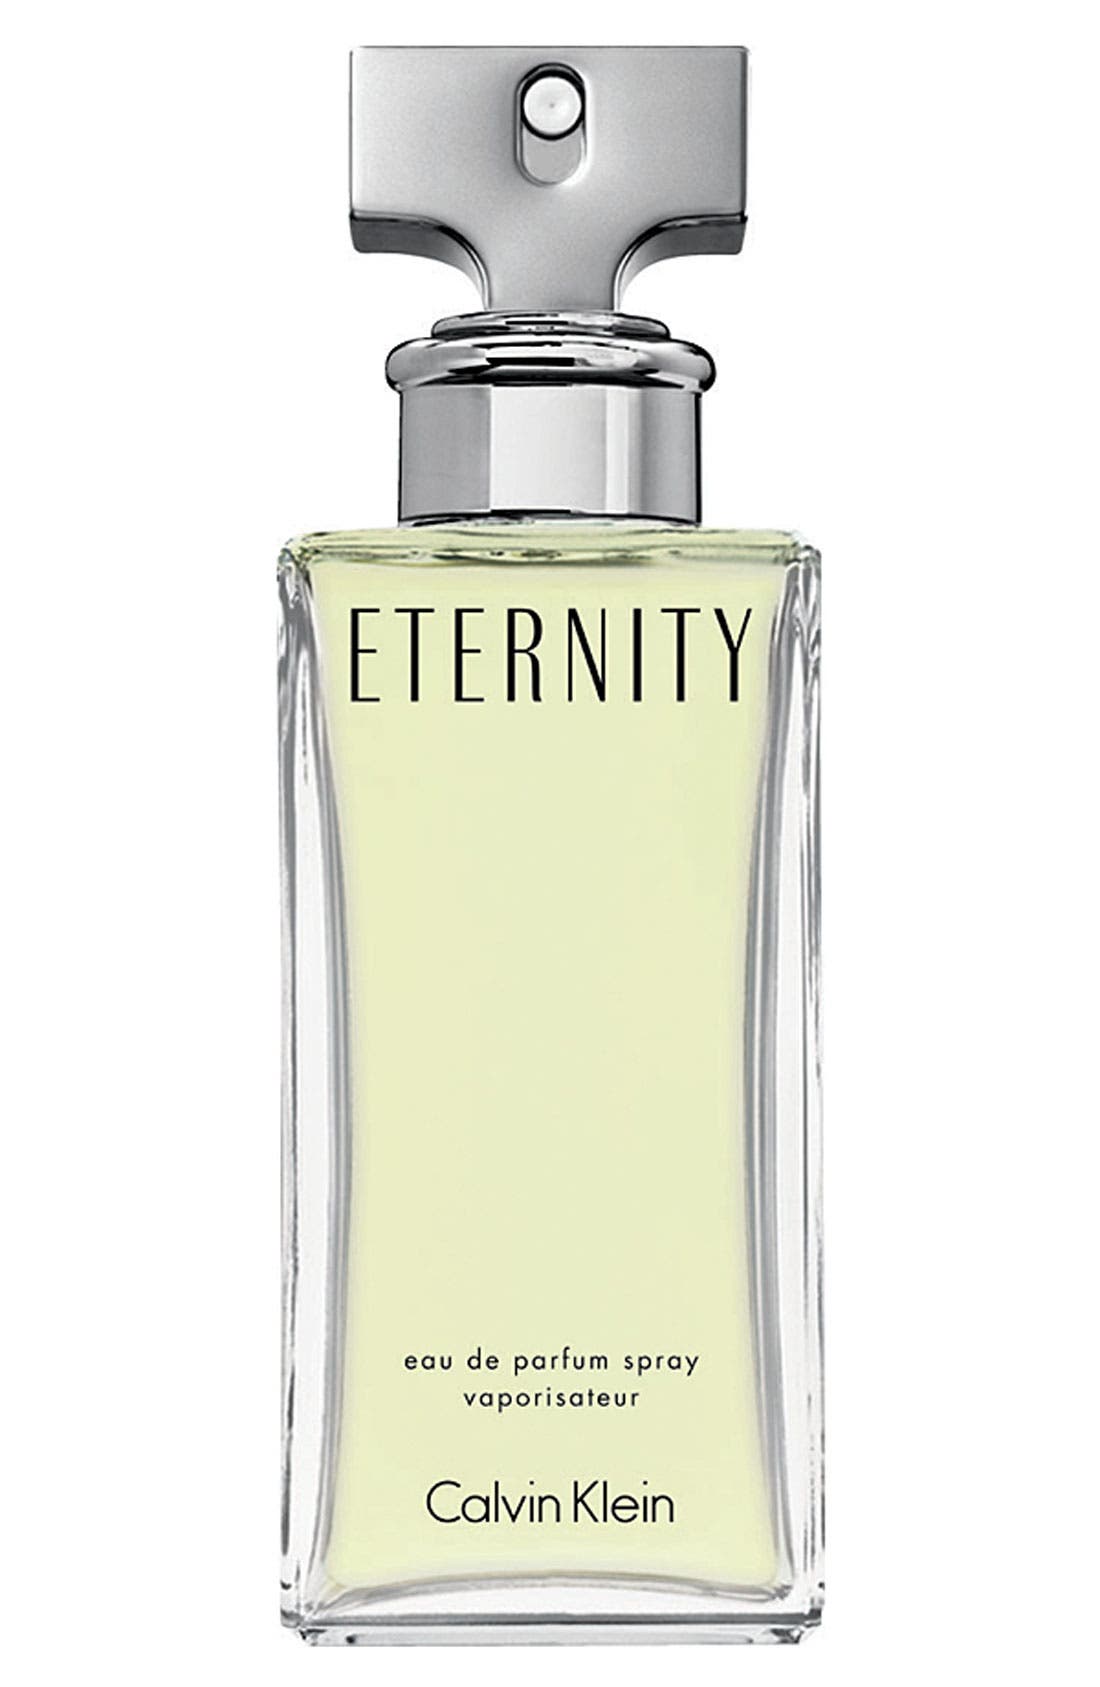 UPC 088300101306 product image for Eternity by Calvin Klein Eau de Parfum Spray 1.7 oz | upcitemdb.com